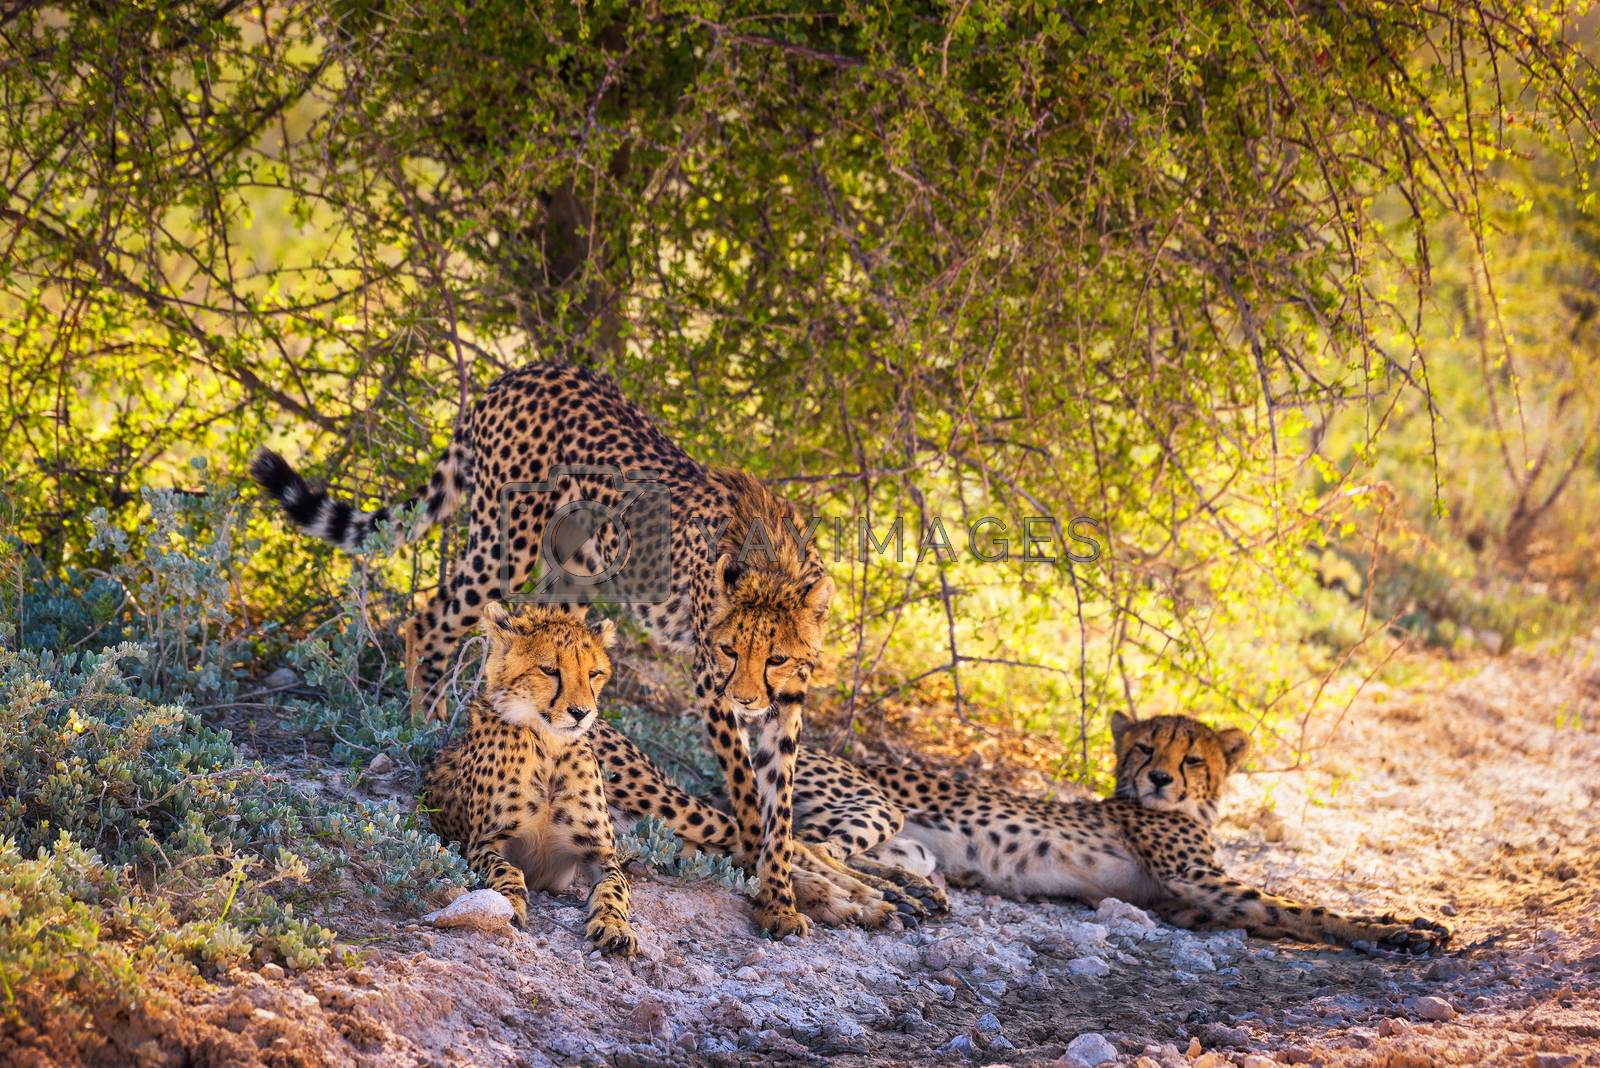 Royalty free image of Three cheetahs in the Etosha National Park by nickfox